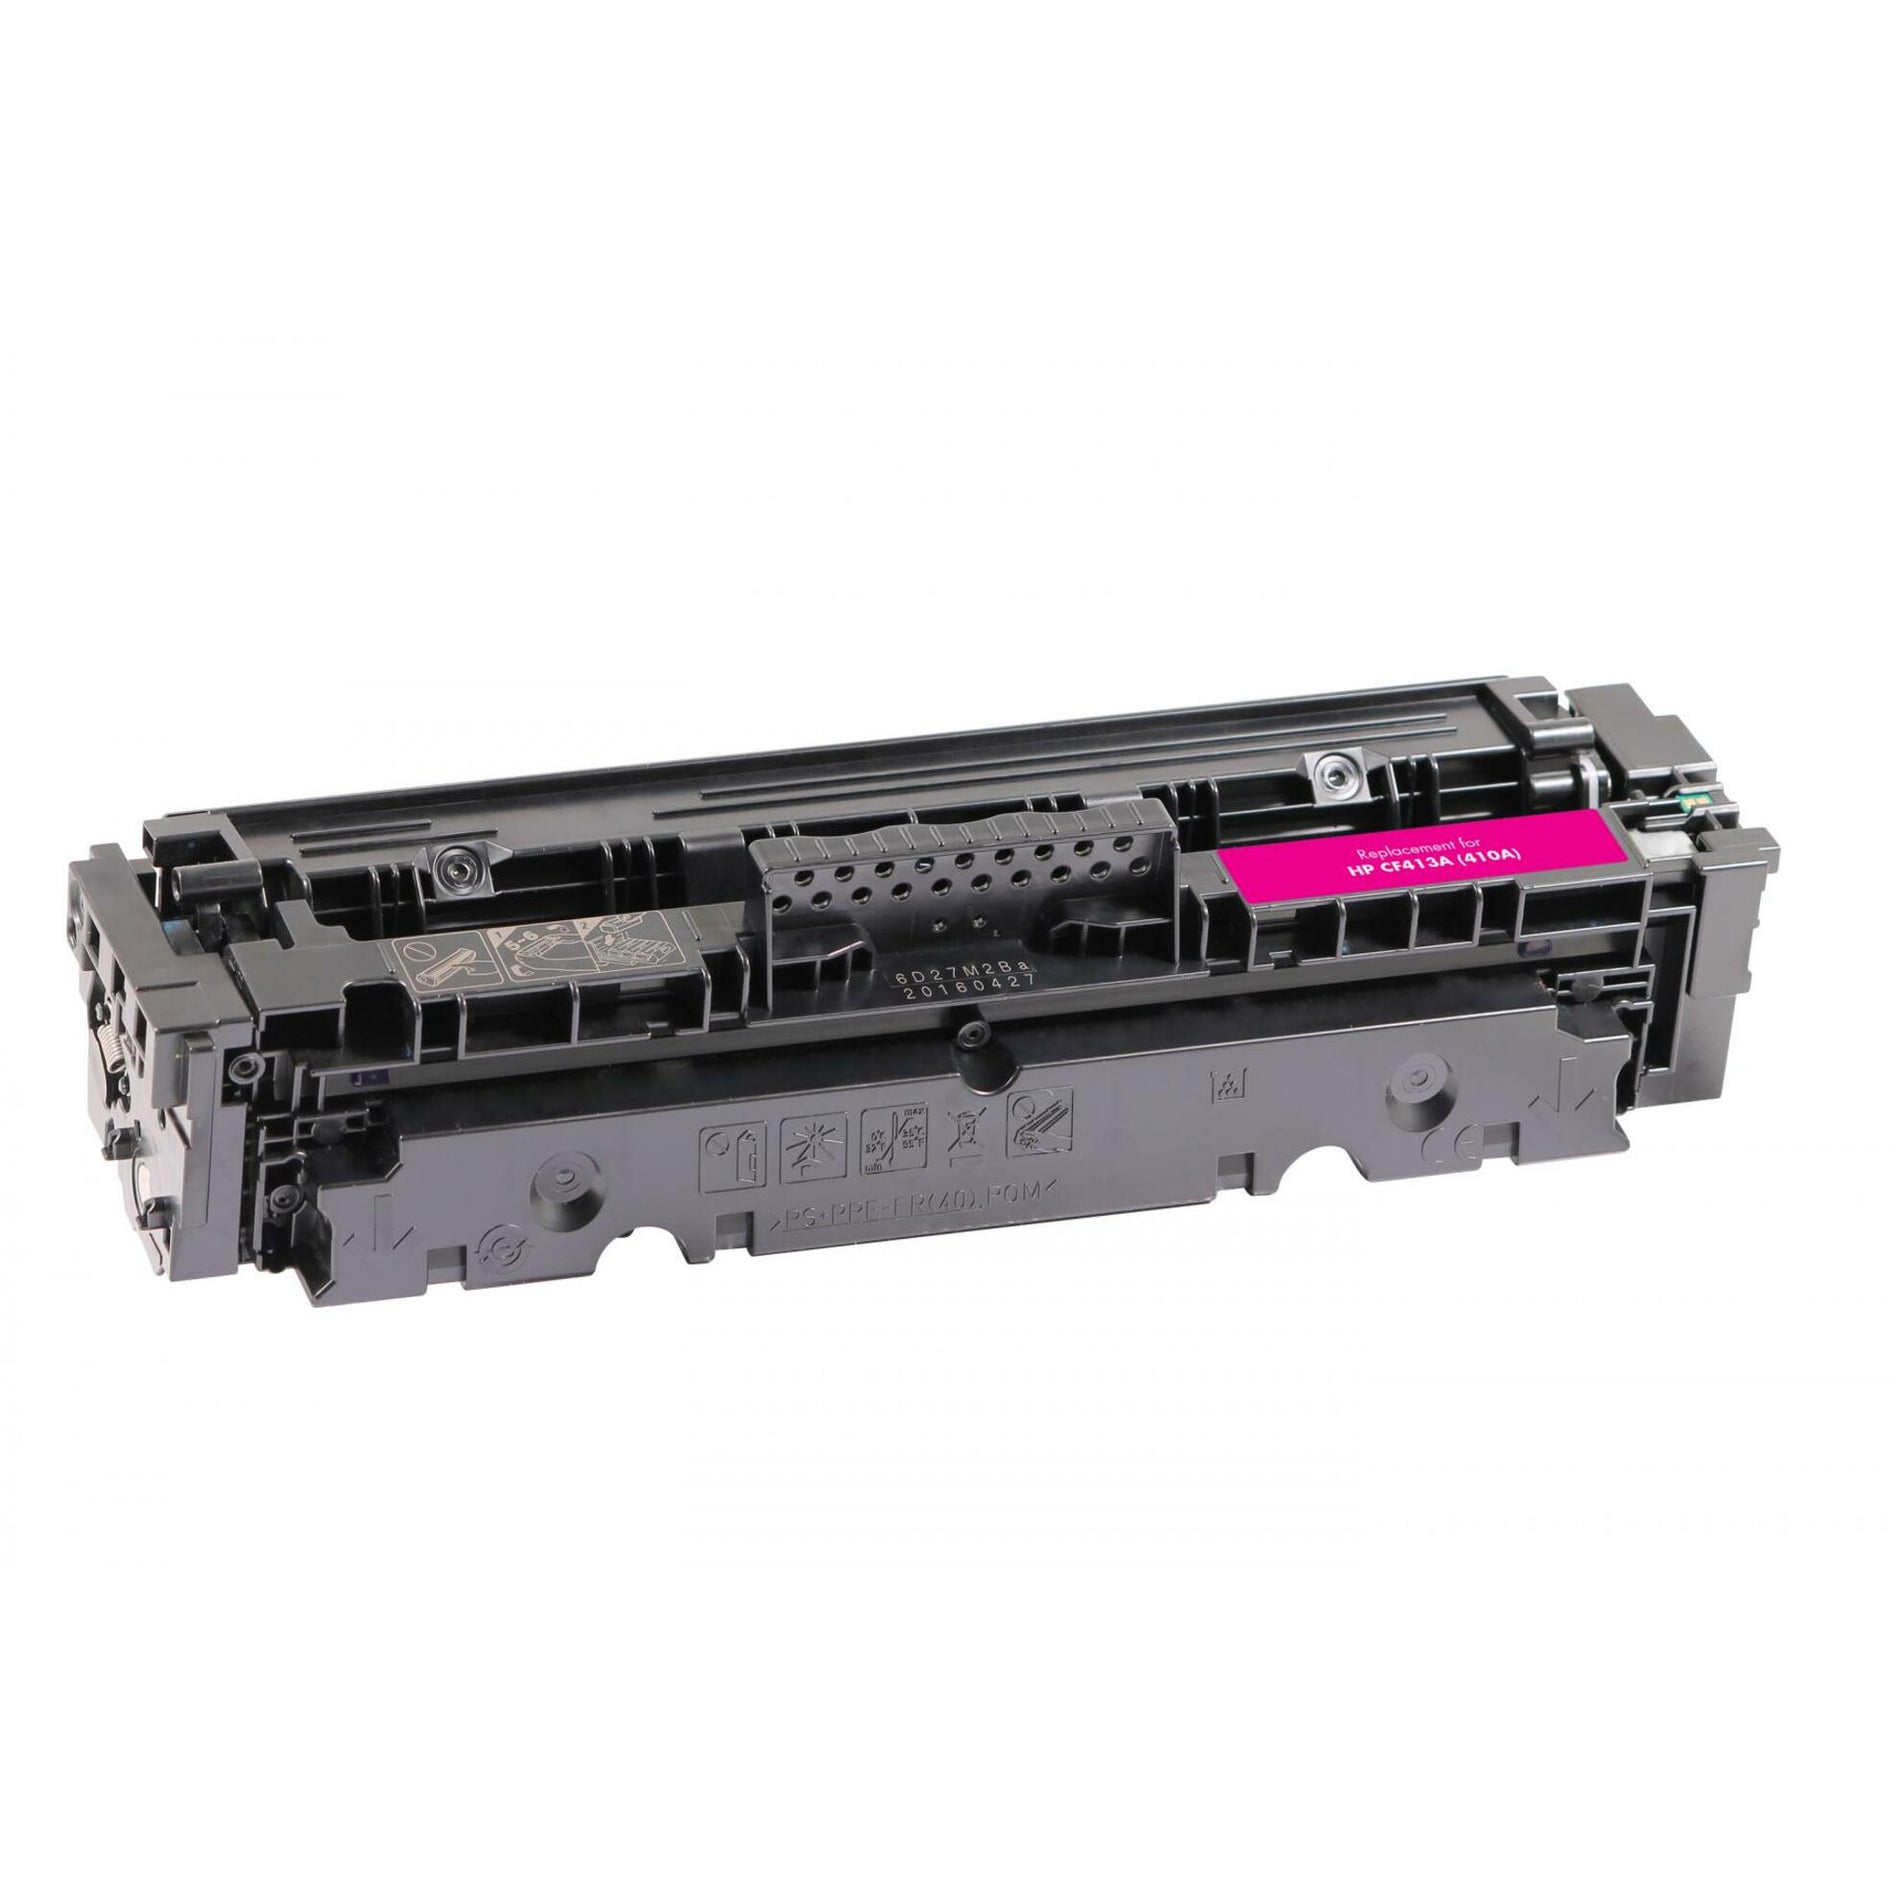 Clover Technologies 200947P Toner Cartridge, Magenta, Compatible with HP Color LaserJet Pro Printers